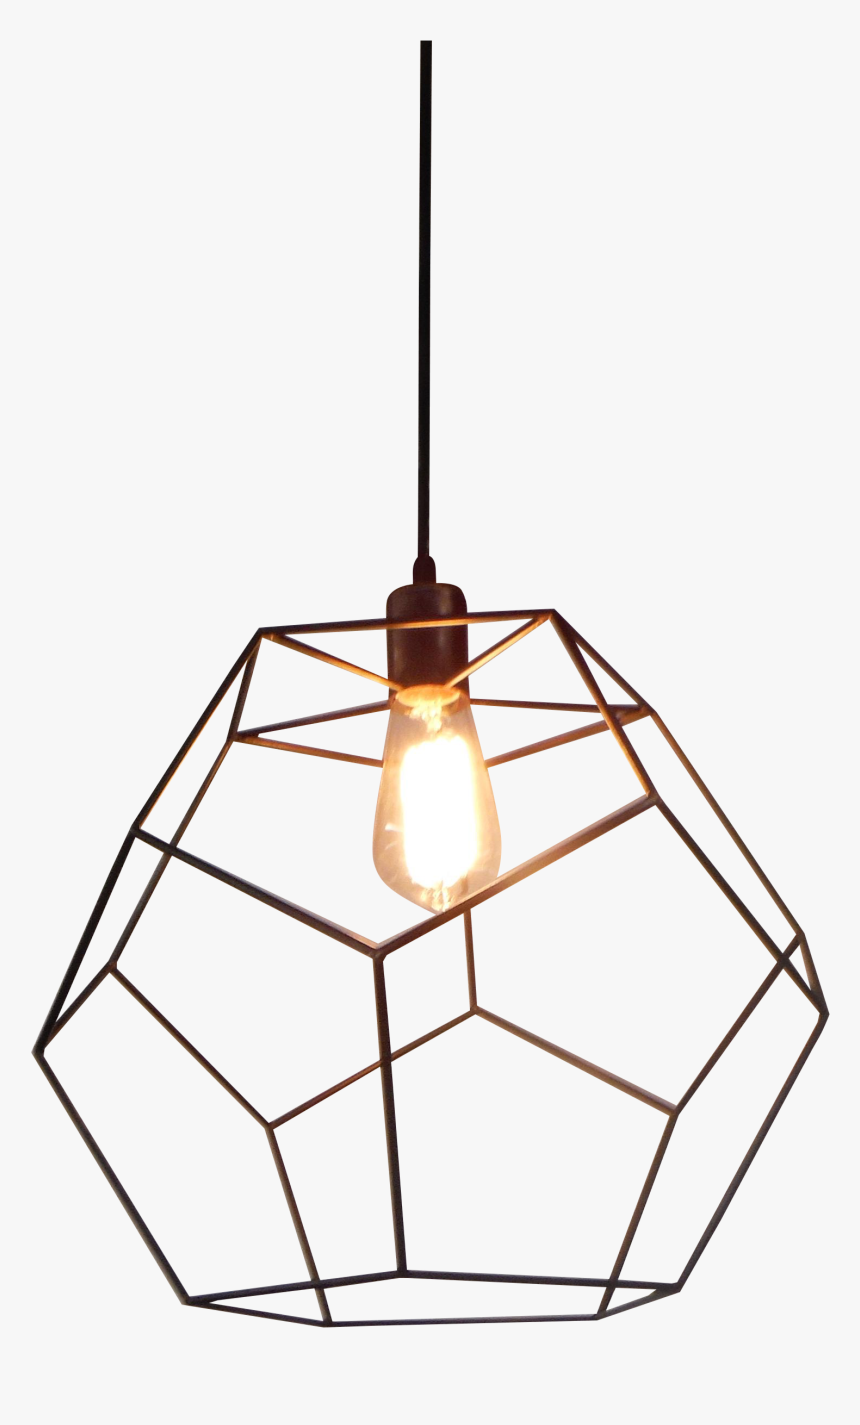 Geometry Lamp Png, Transparent Png, Free Download